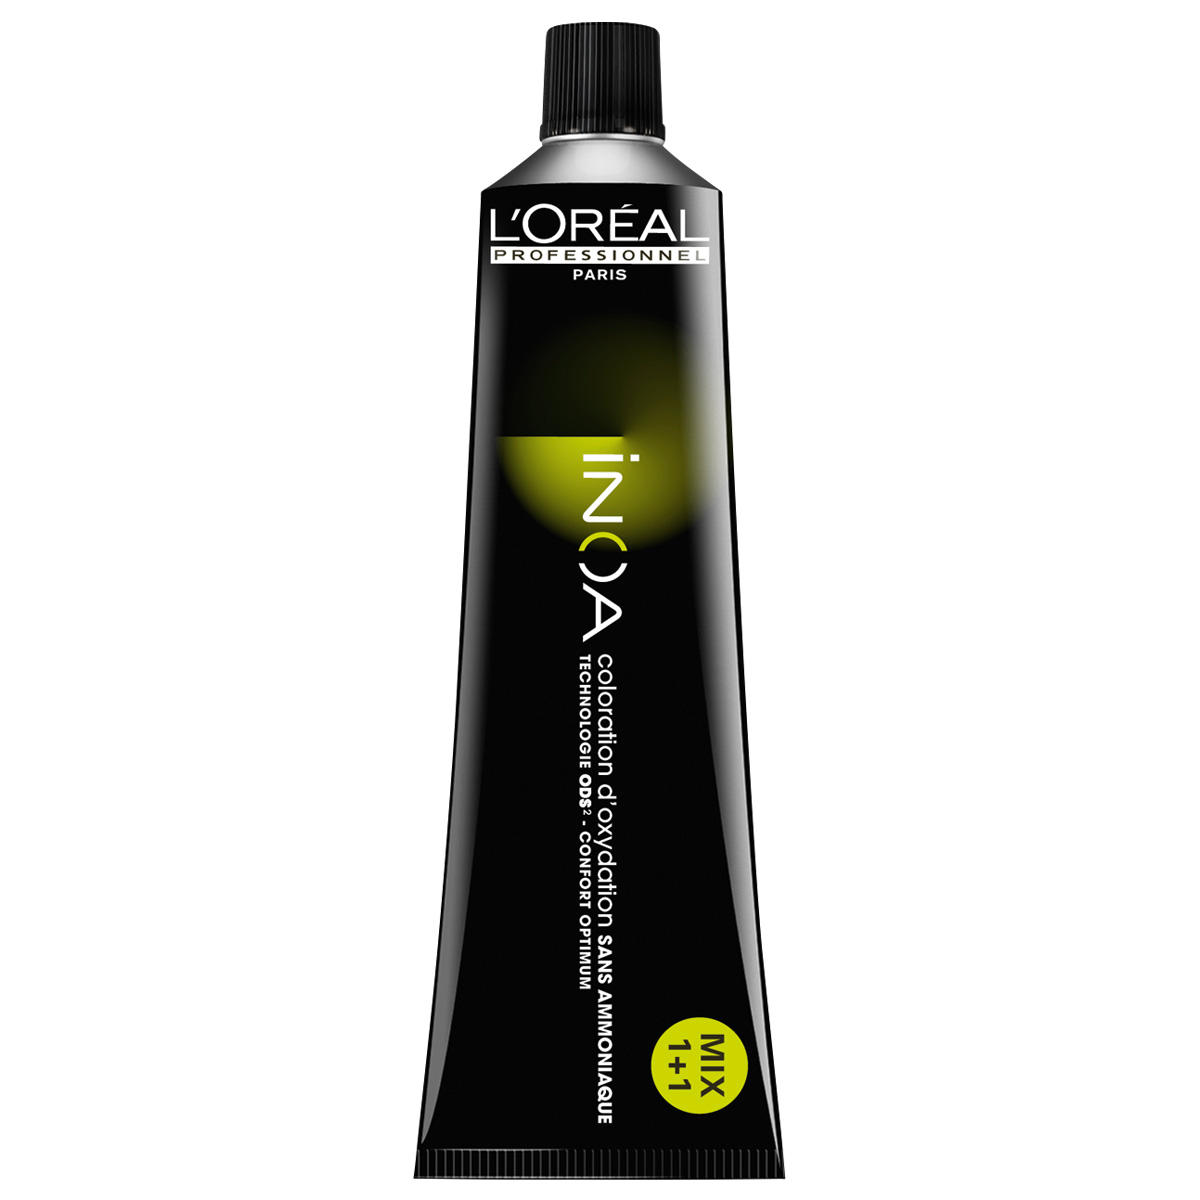 L'Oréal Professionnel Paris Coloration 7.13 Biondo medio Ash Gold, Tubo 60 ml - 1